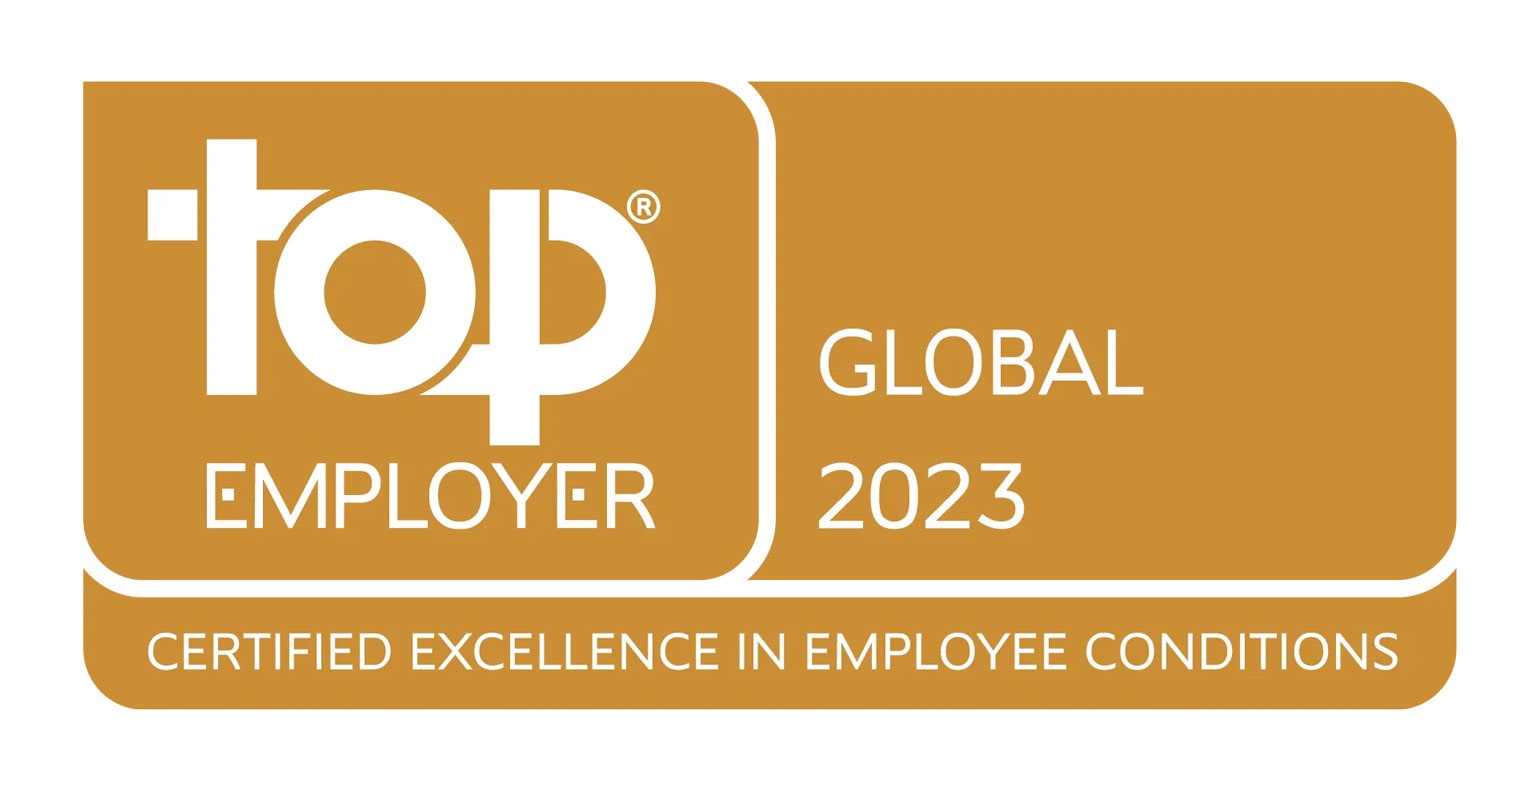 Top Employer Global 2023 badge